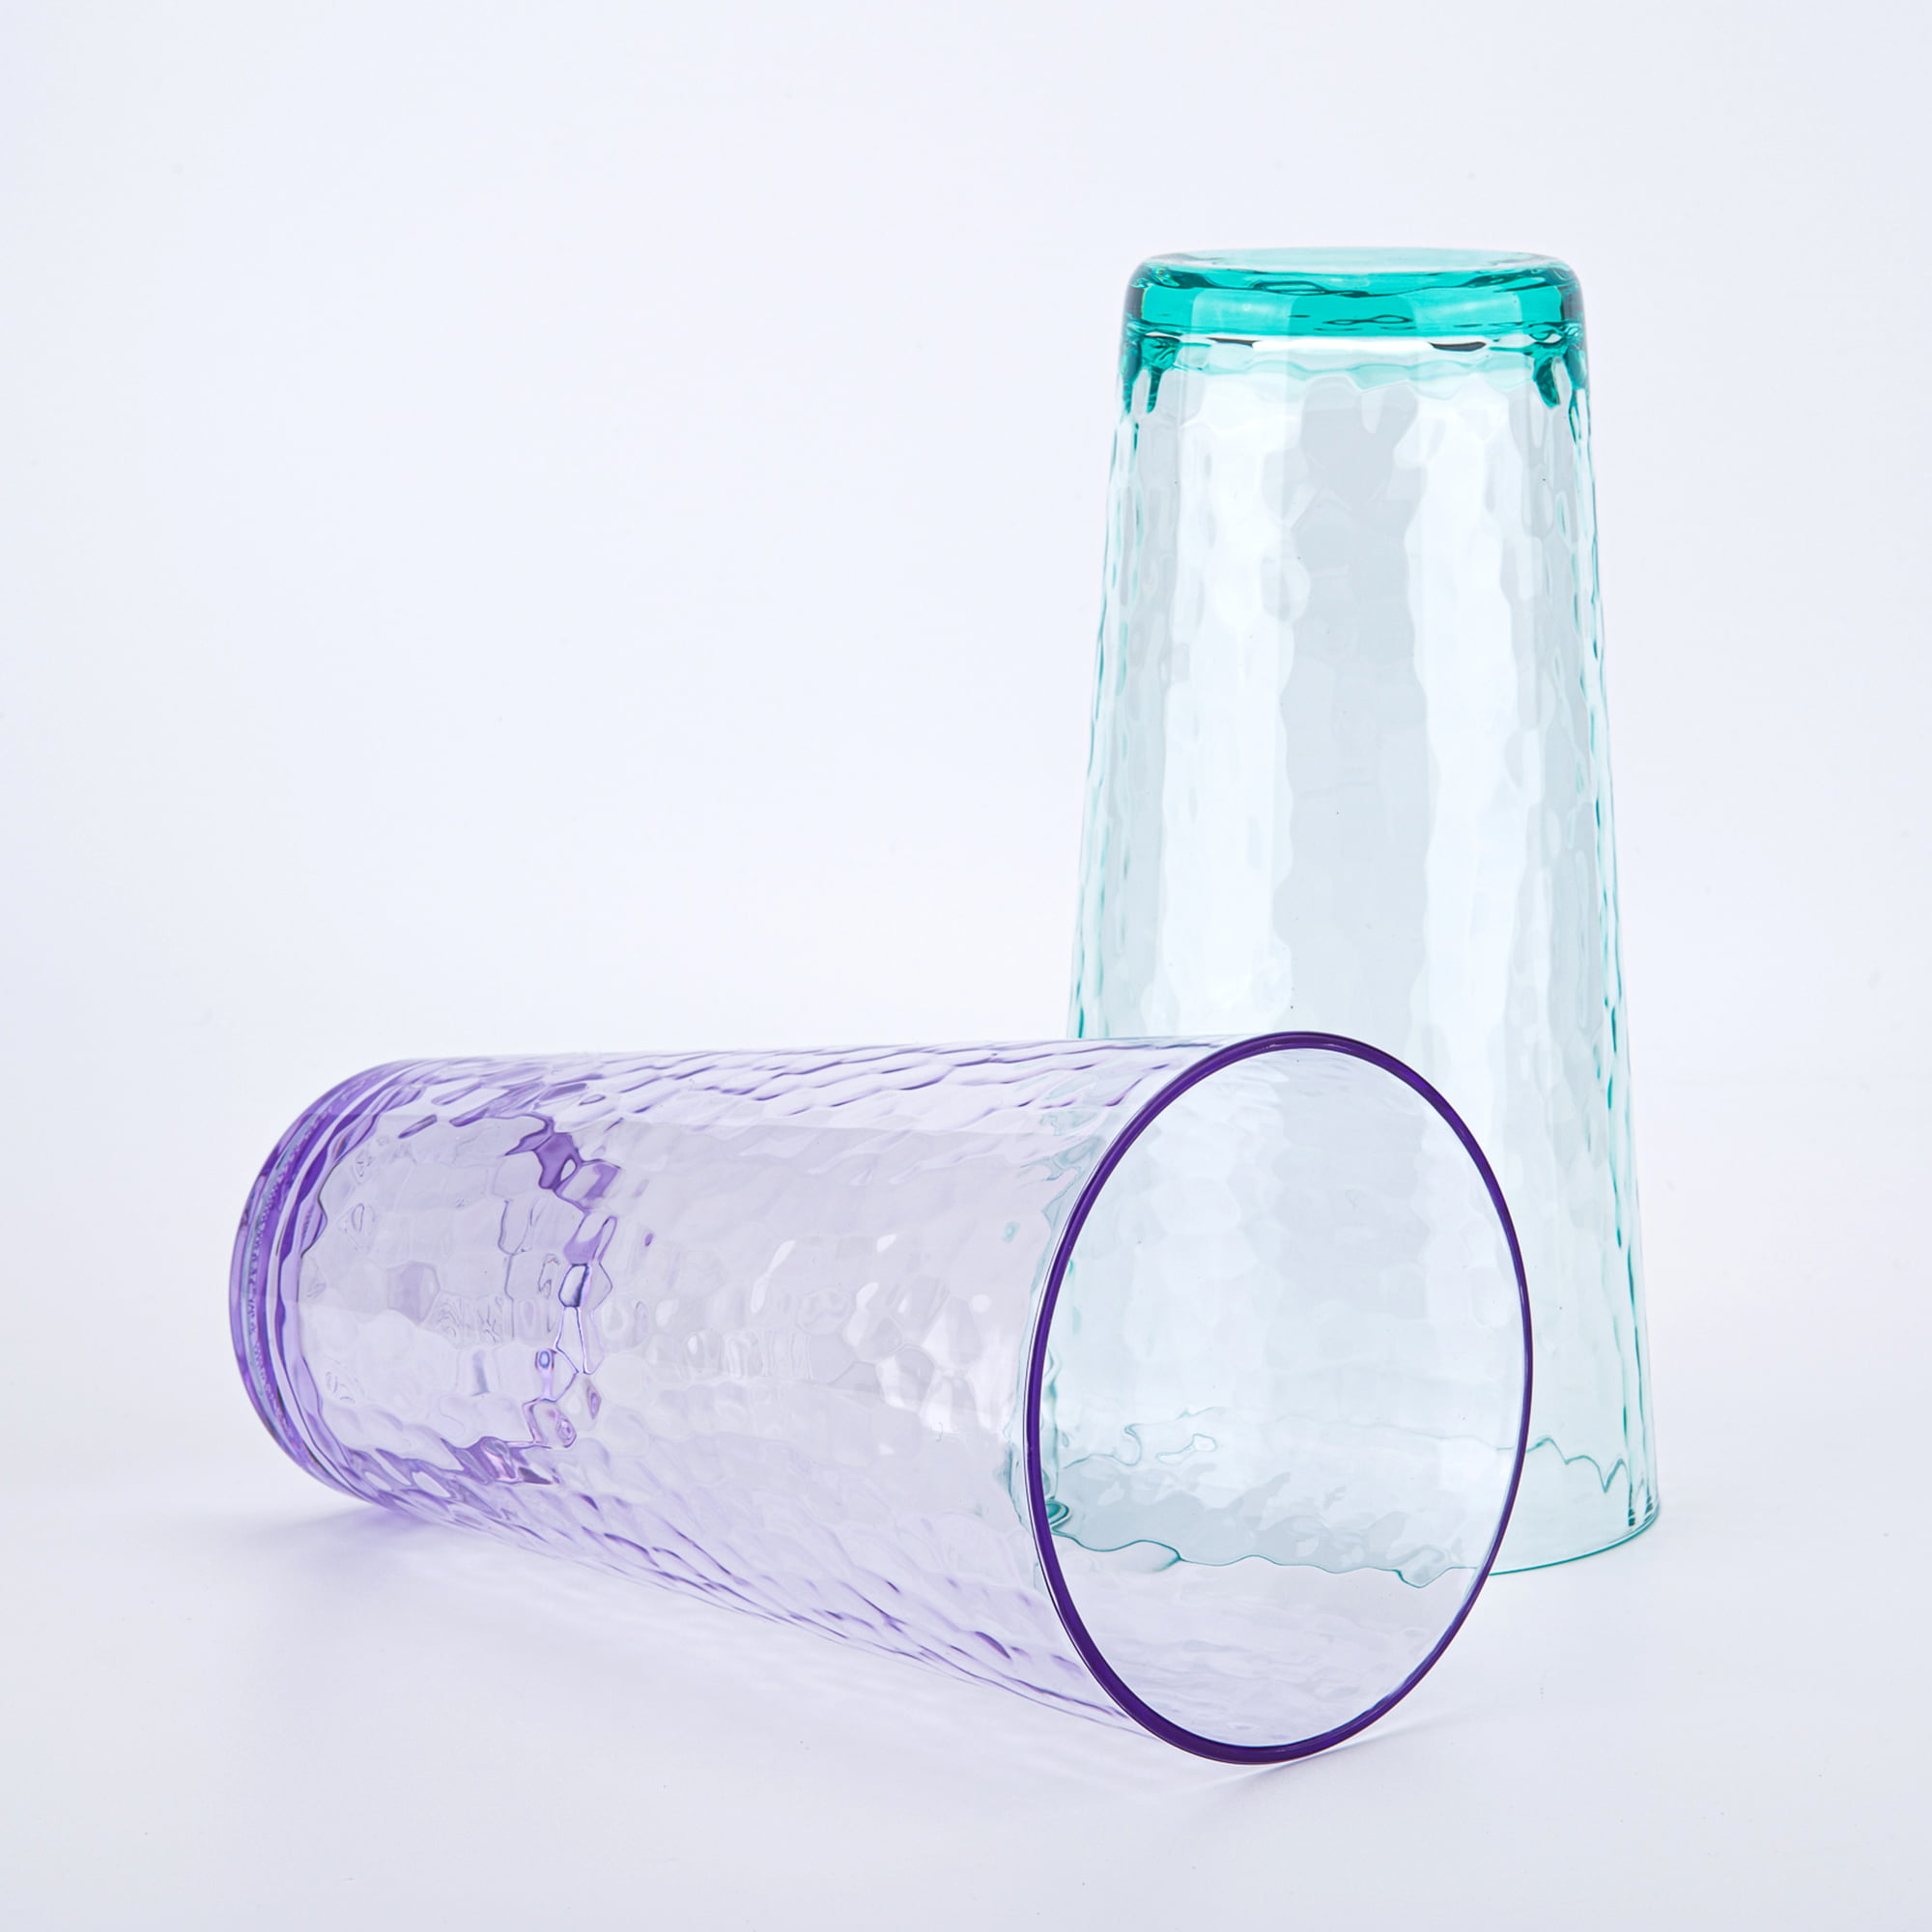 ALIMOTA Plastic Tumblers Cups, [UNBREAKABLE Acrylic] Plastic Water Tumbler  Drinking Glasses, 13-Ounc…See more ALIMOTA Plastic Tumblers Cups